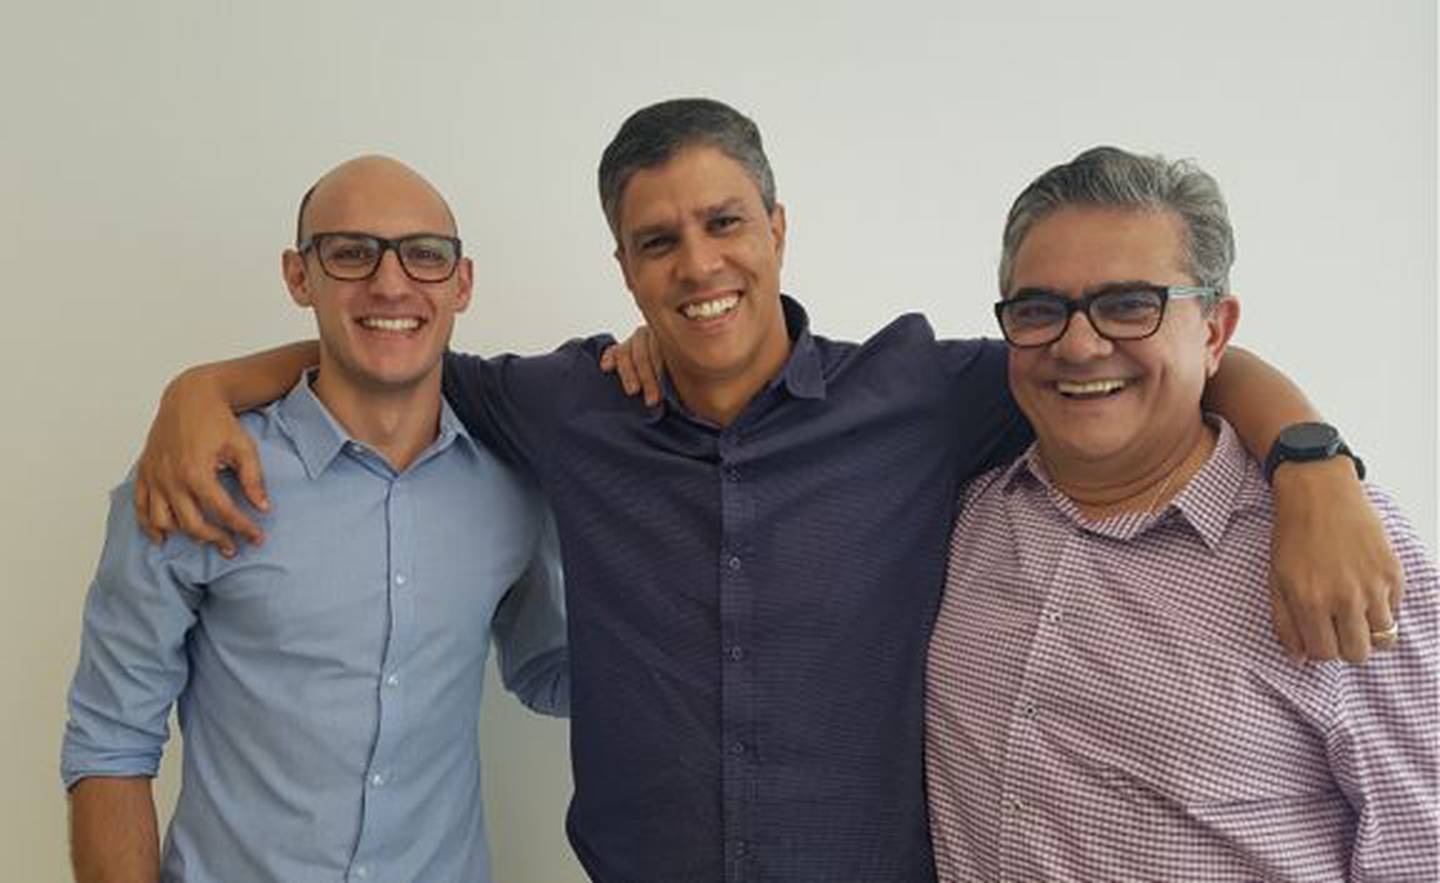 Marcelo Guarnieri, Ricardo Araujo, and Celso Queiroz - cofundadores de Kangu, adquirida esta semana por Mercado Libre